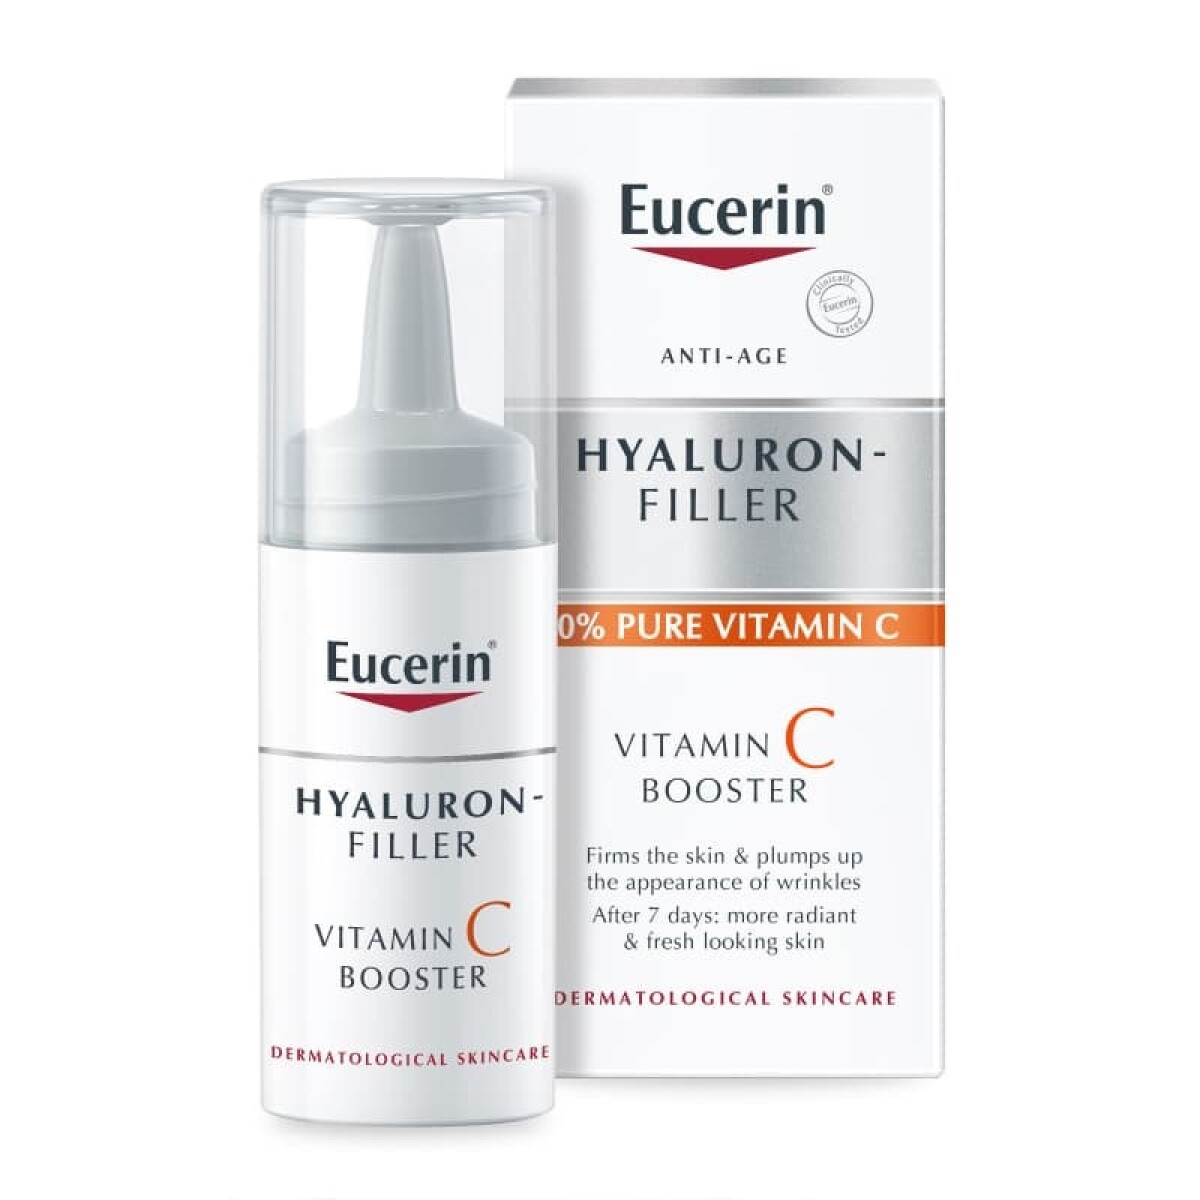 Hyaluron Filler Vitamin C Booster Eucerin 8 Ml. 